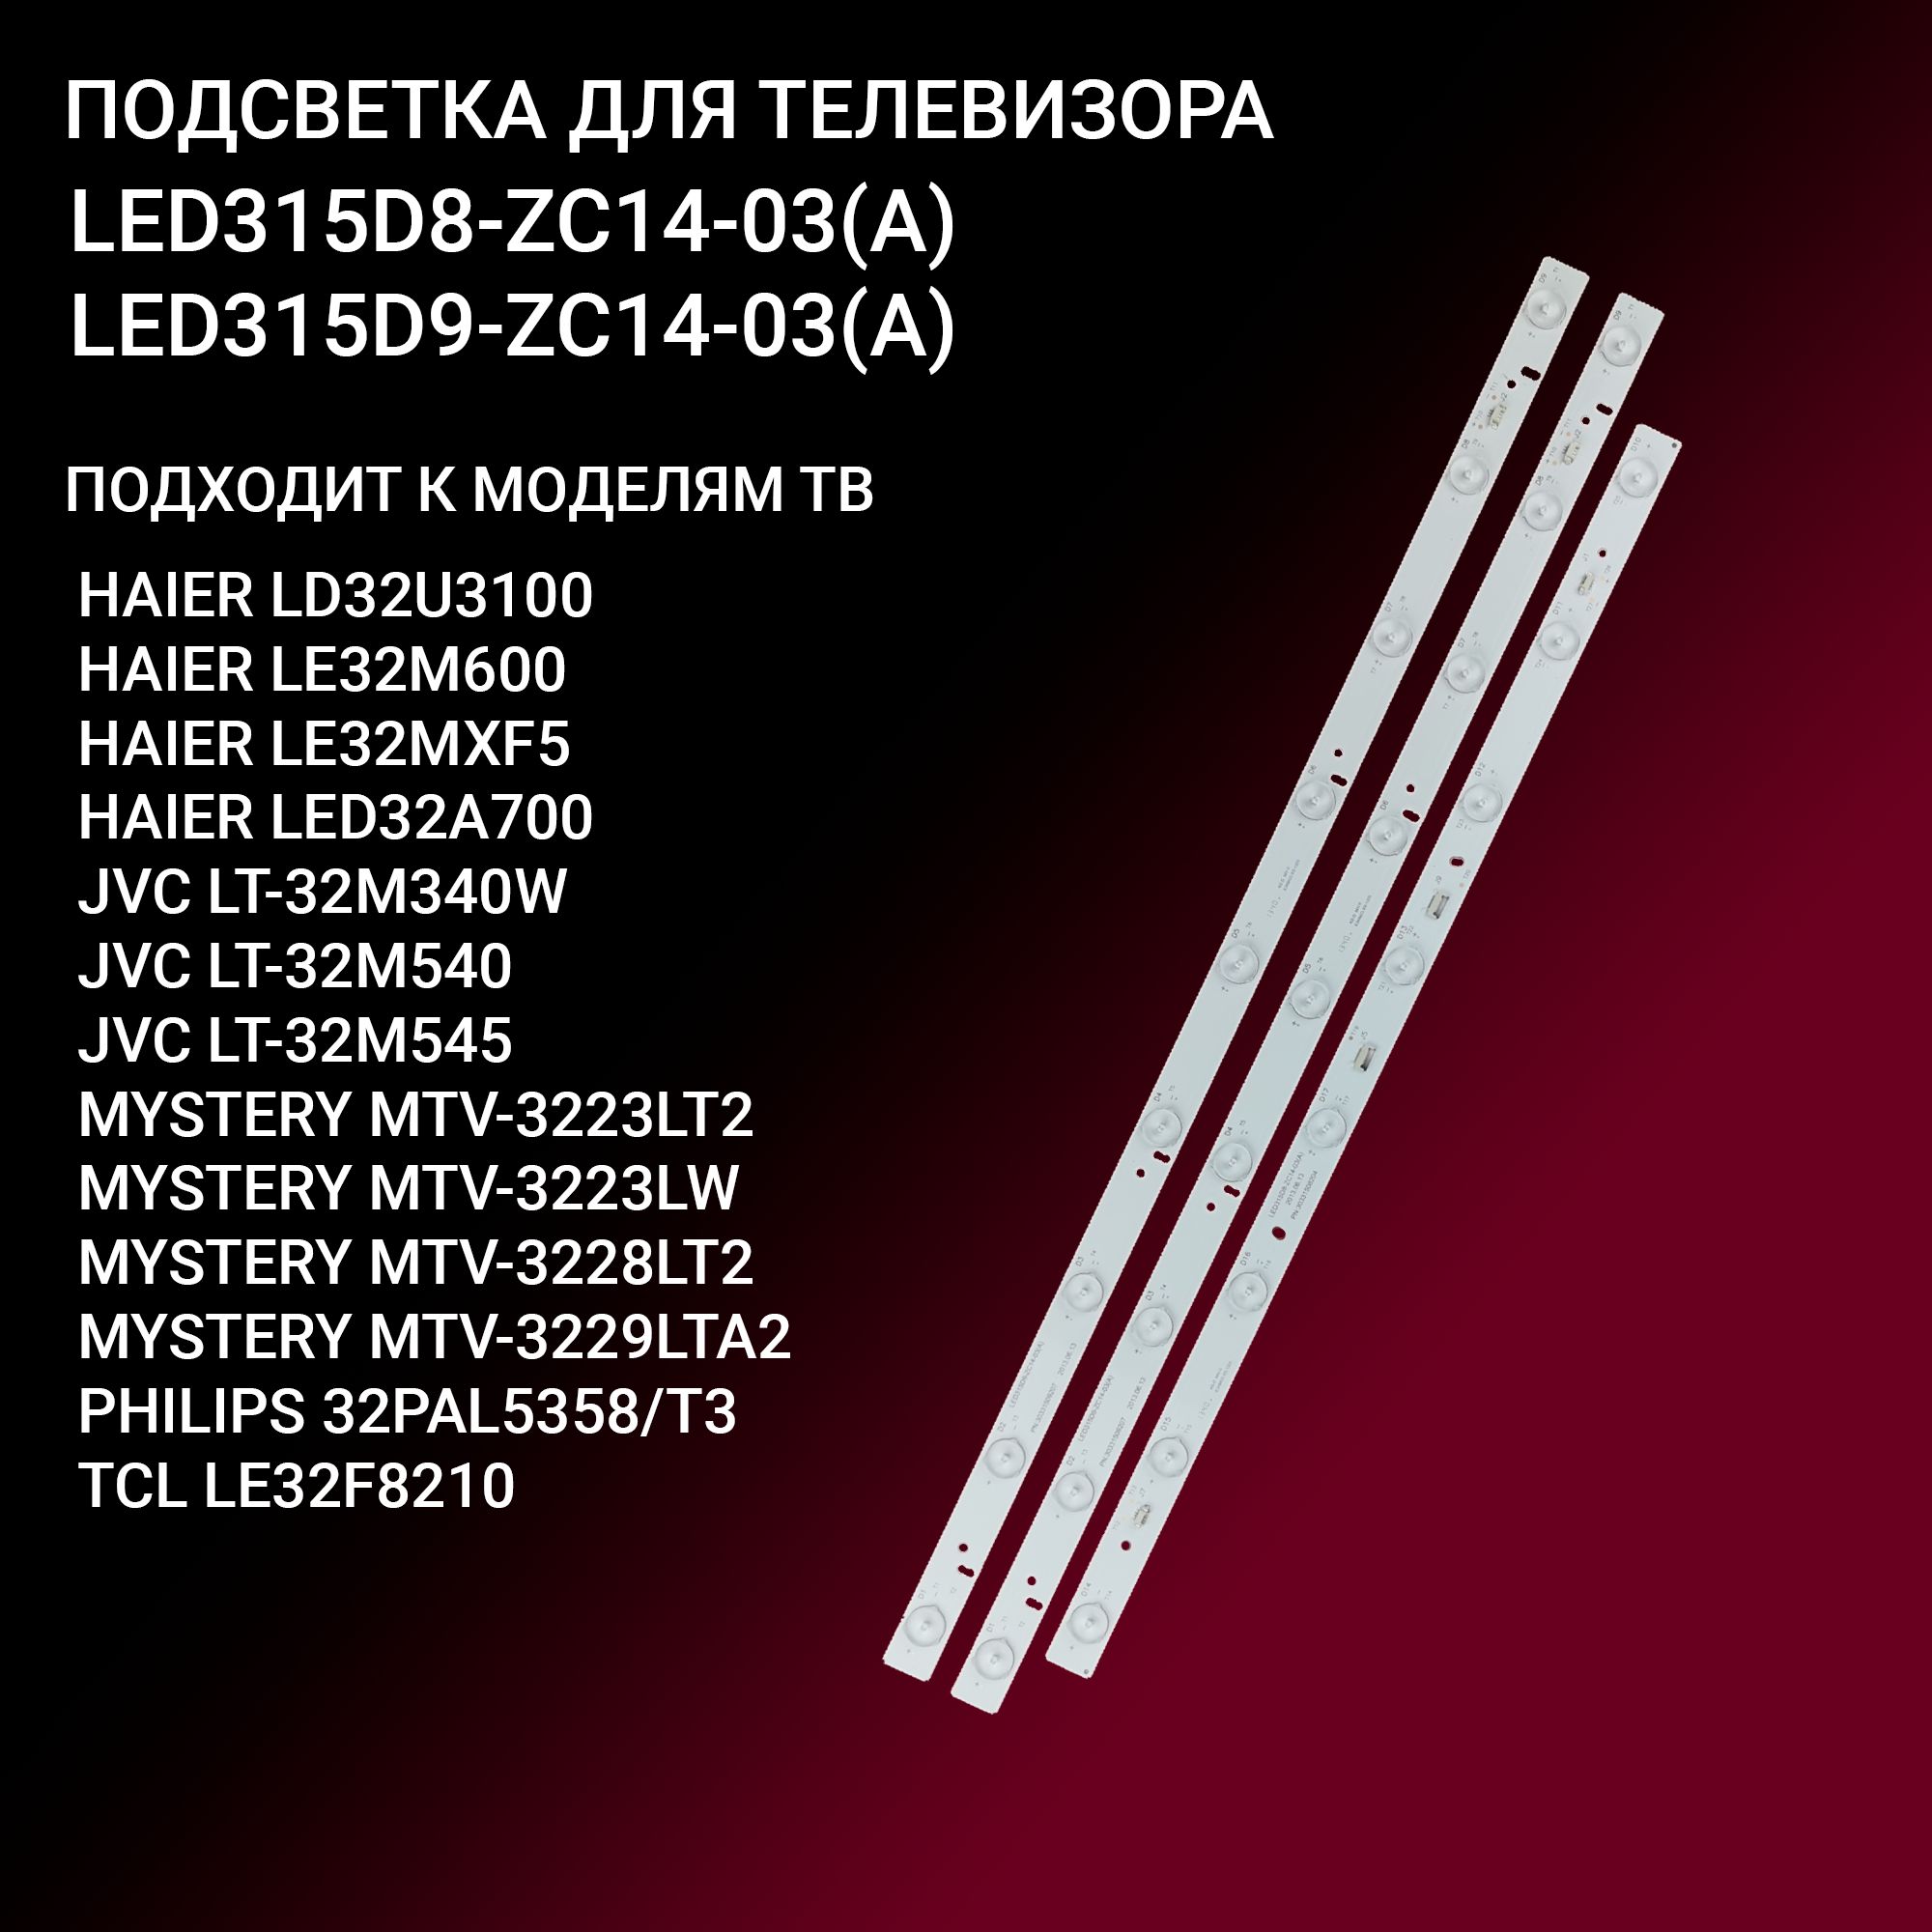 ПодсветкаLED315D8-ZC14-03(A)+LED315D9-ZC14-03(A)дляТВMysteryMTV-3223LW,3223LT2,3228LT2,3229LTA2,JVCLT-32M340W,32M540